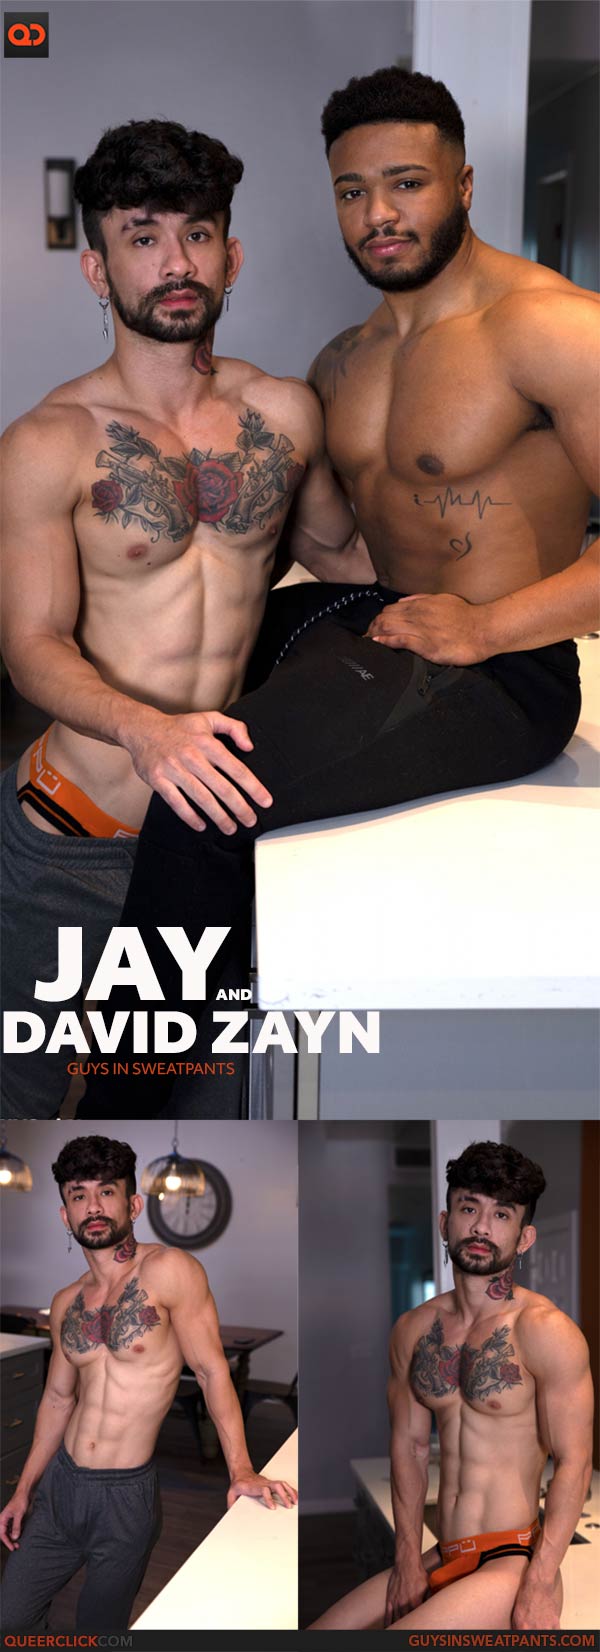 Guys in Sweatpants: Jay and David Zayn